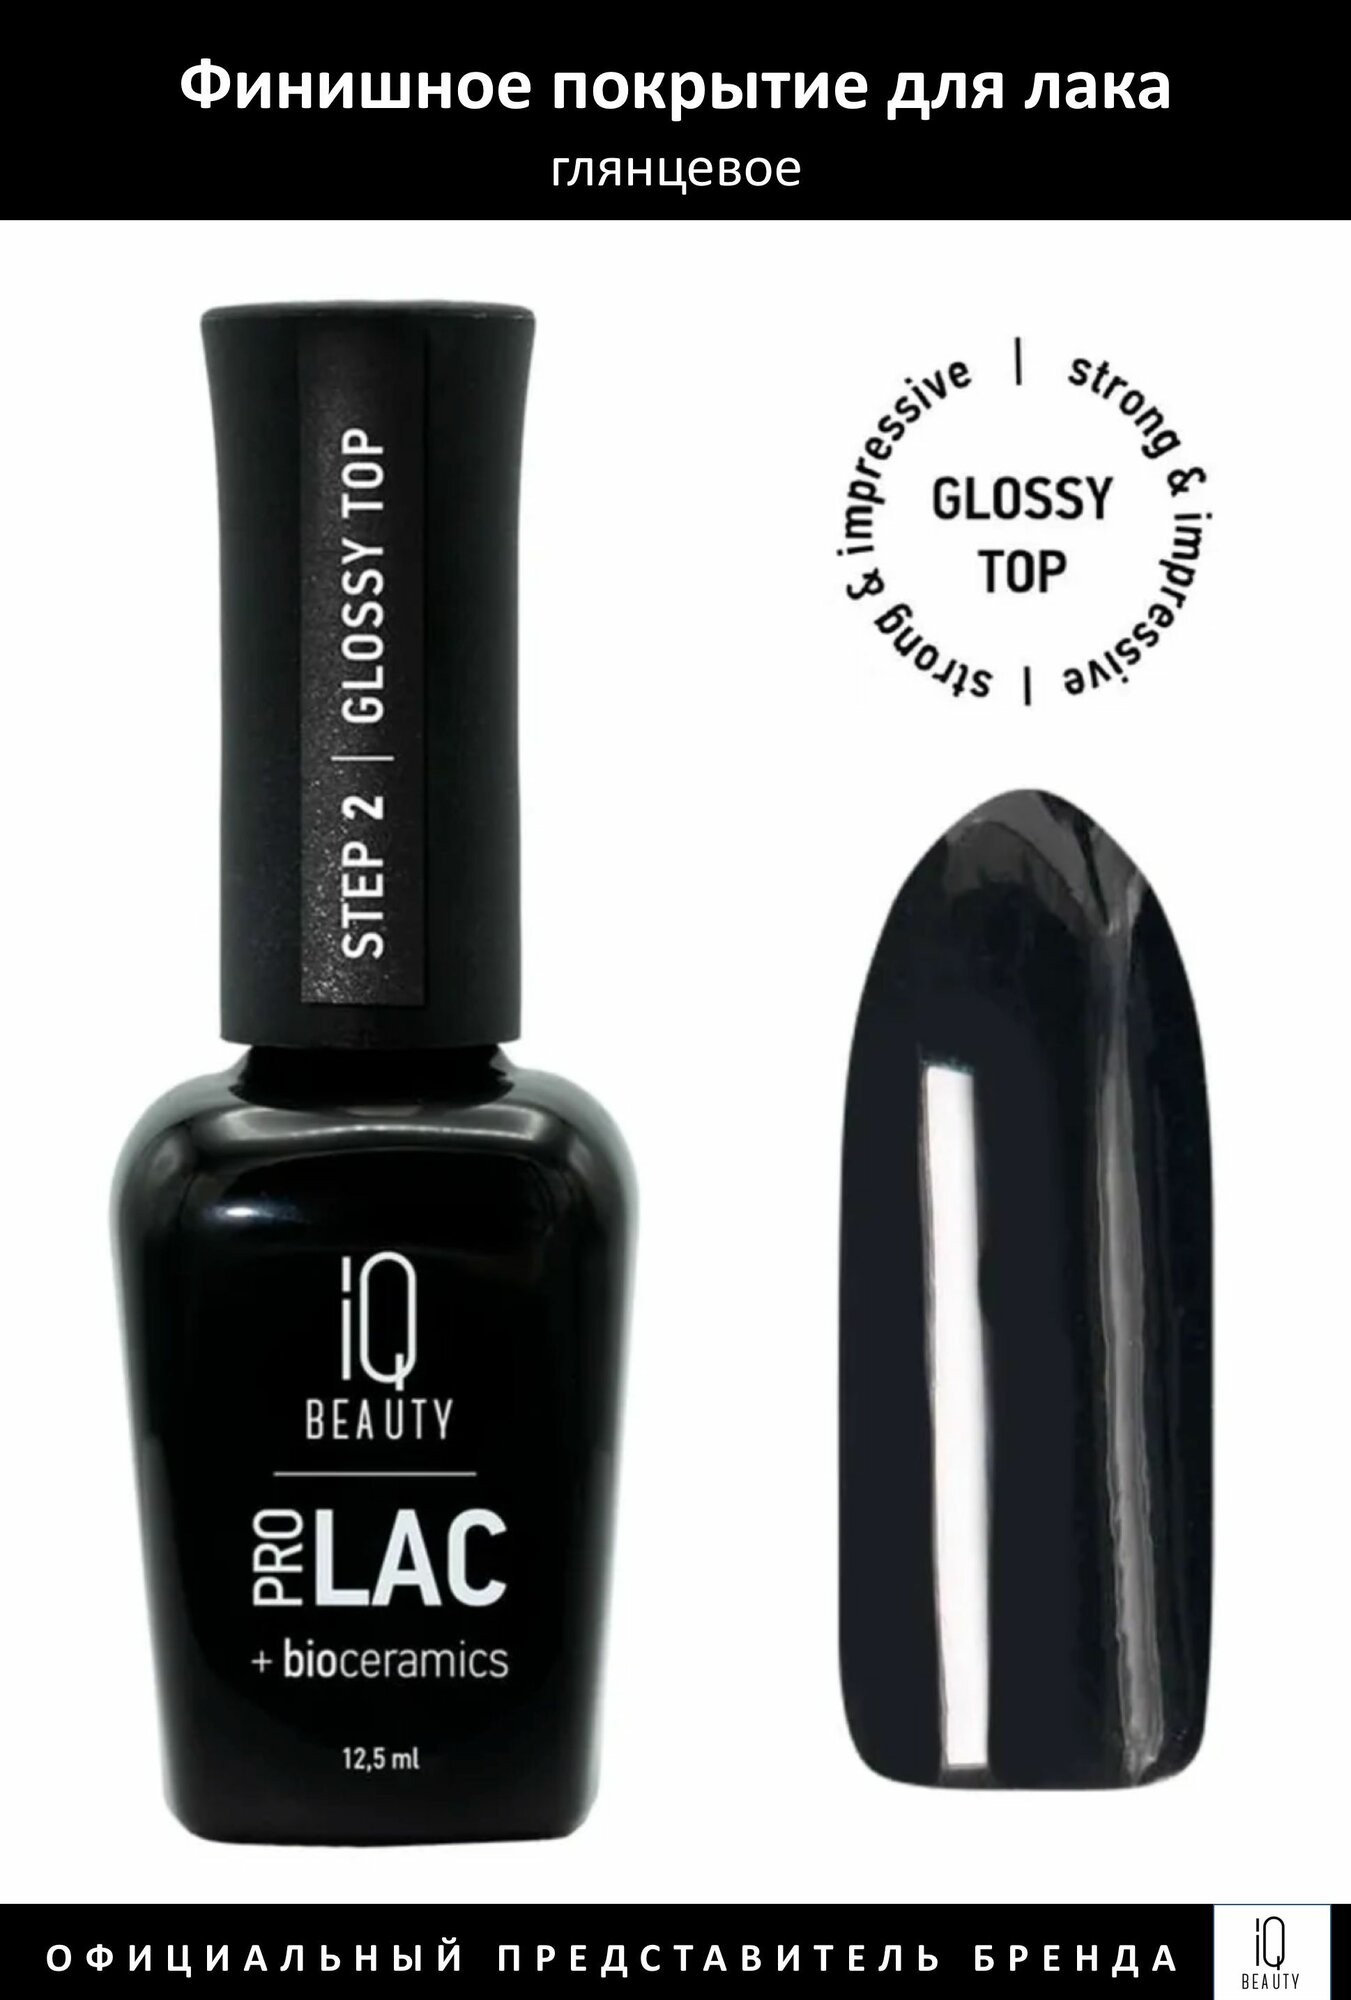 IQ Beauty Prolac Финишное покрытие для лака глянцевое с биокерамикой Glossy top12,5мл